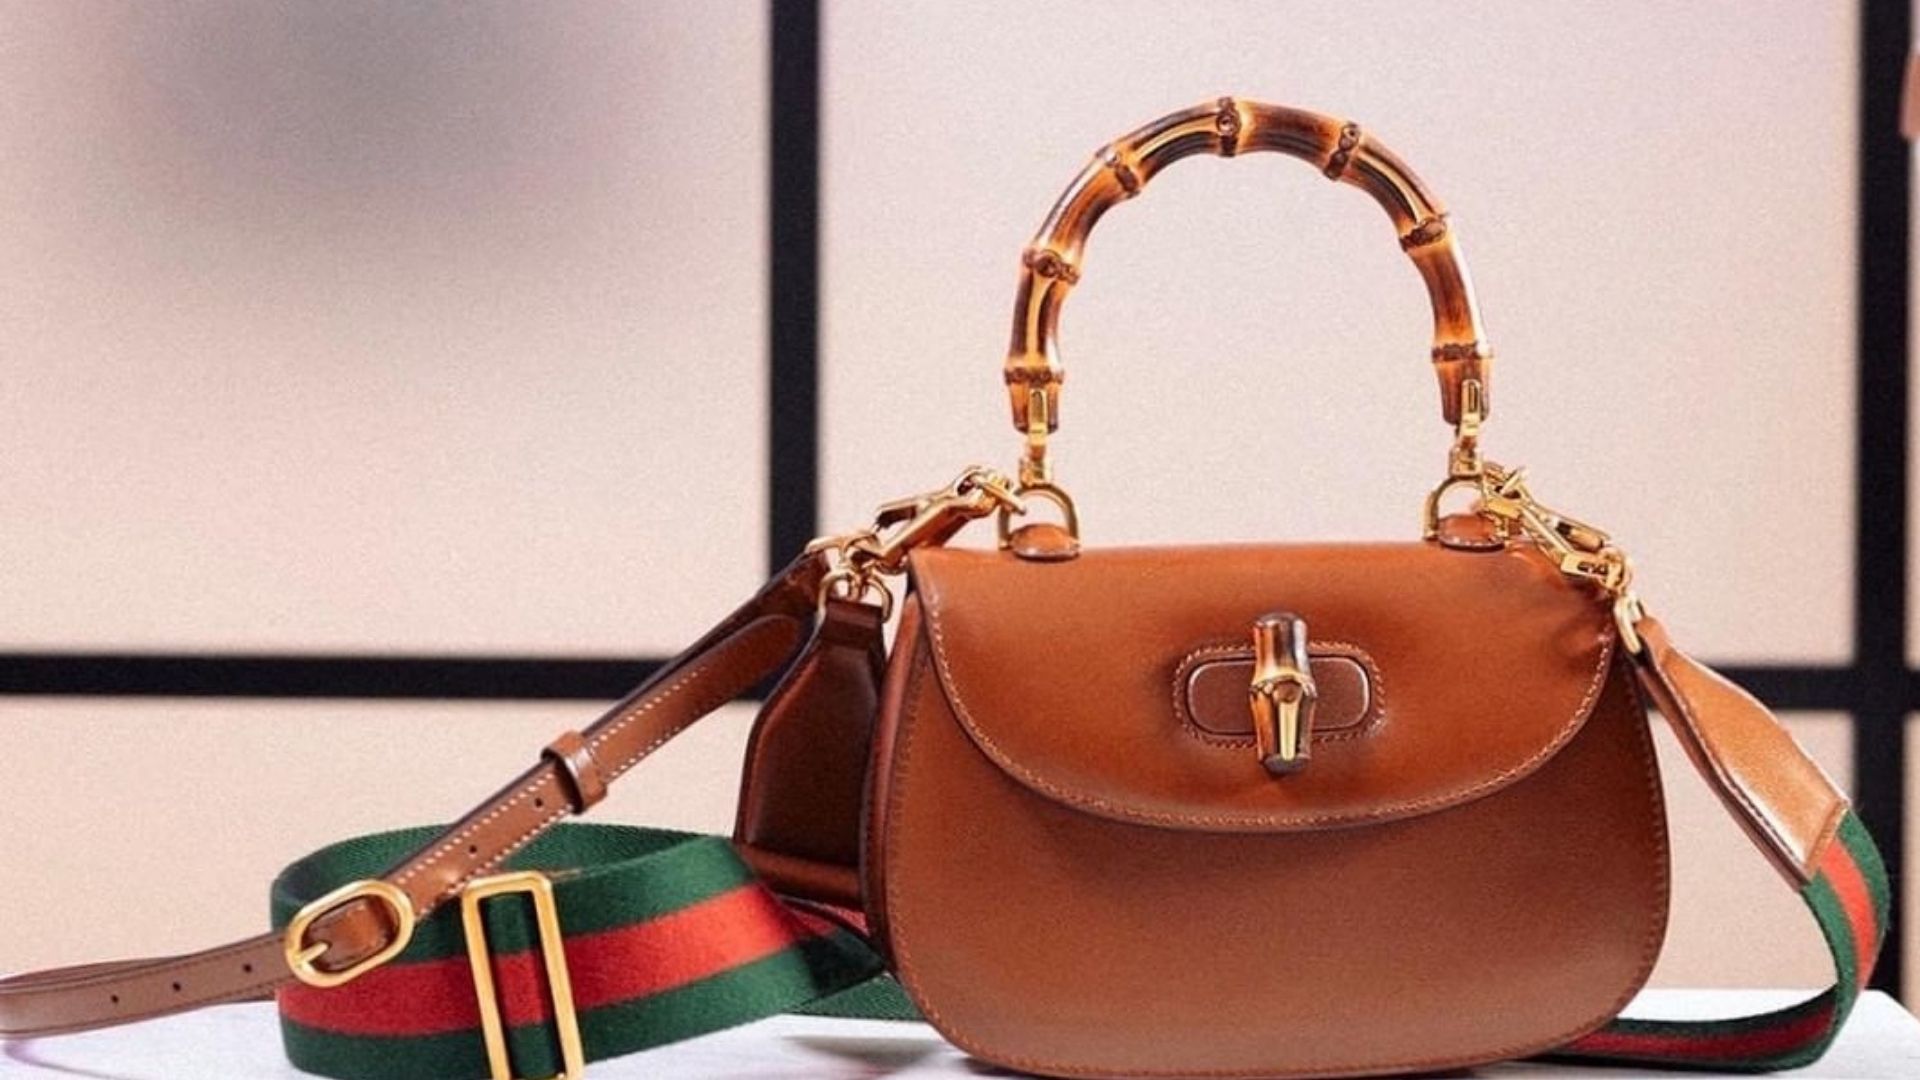 Gucci Collections, Vintage Designer Purses & Bags